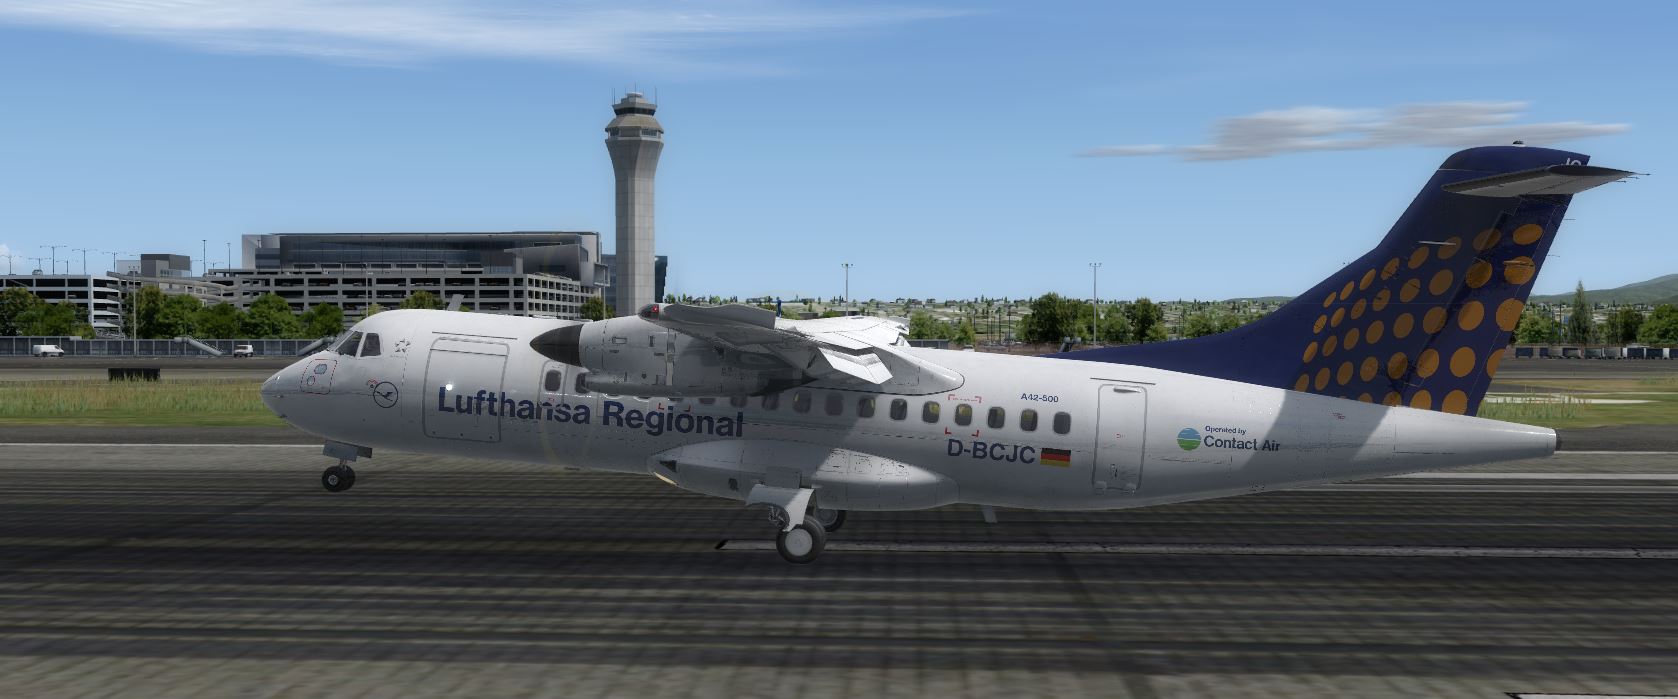 ATR42-500 Lufthansa-3979 